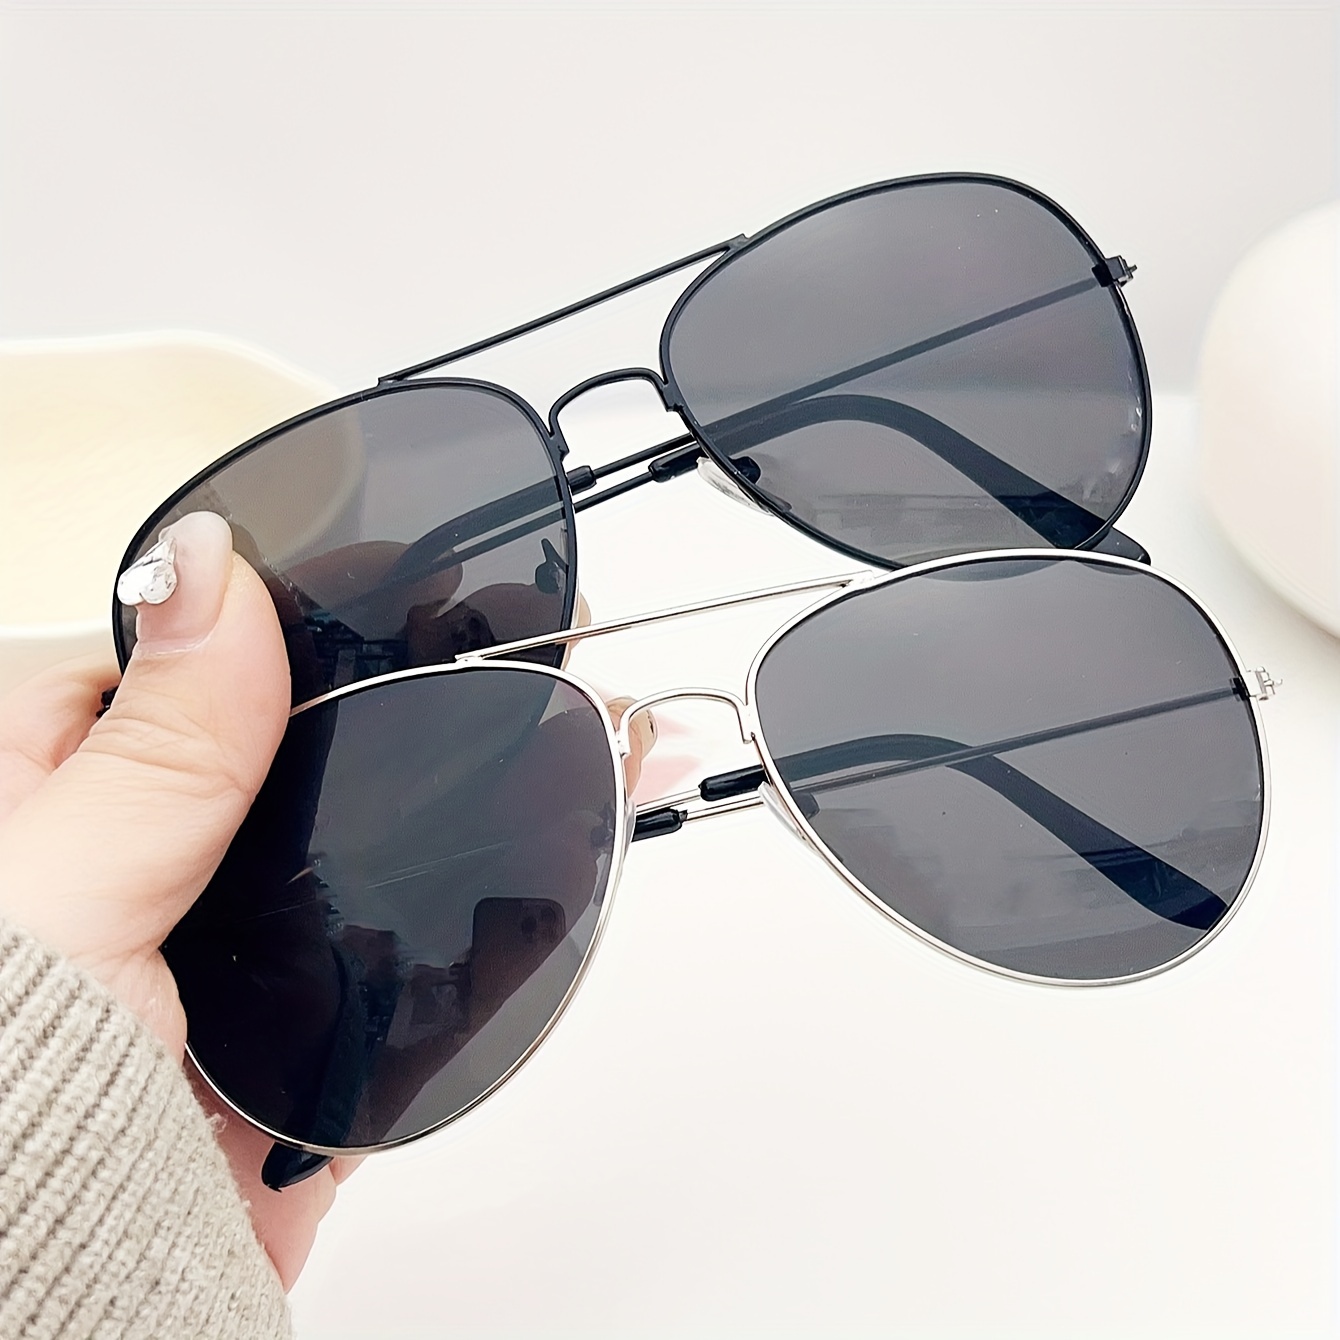 

2pcs Double Bridge Fashion Glasses For Women Men Mirrored Fashion Vintage Sun Shades For Driving Beach Travel